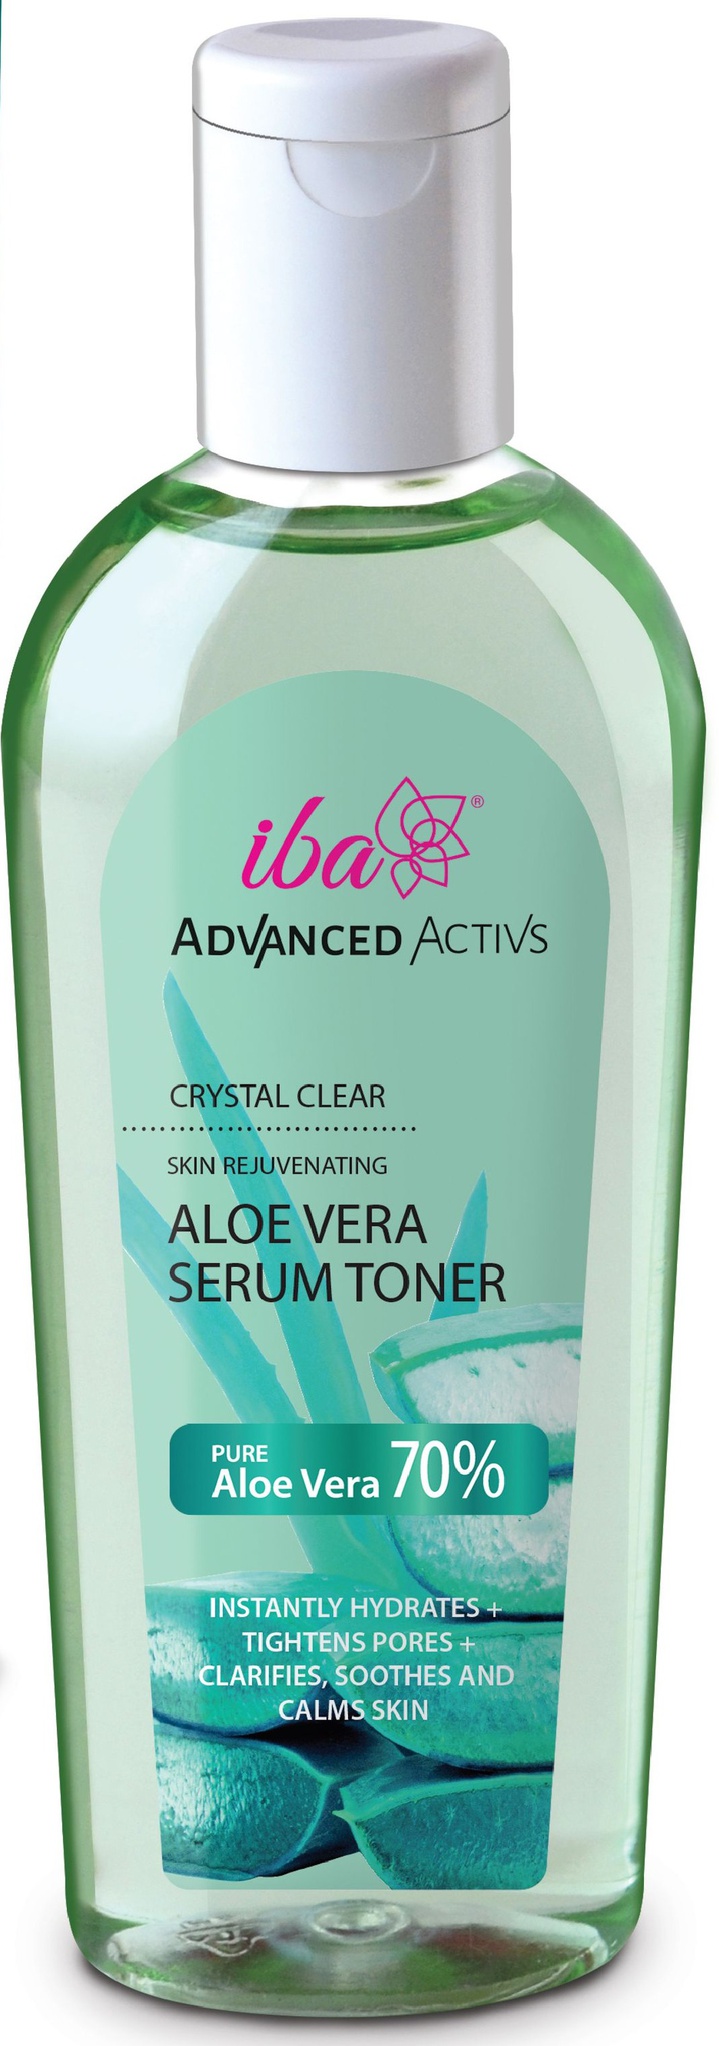 Iba halal Crystal Clear Skin Rejuvenating Aloe Vera Serum Toner